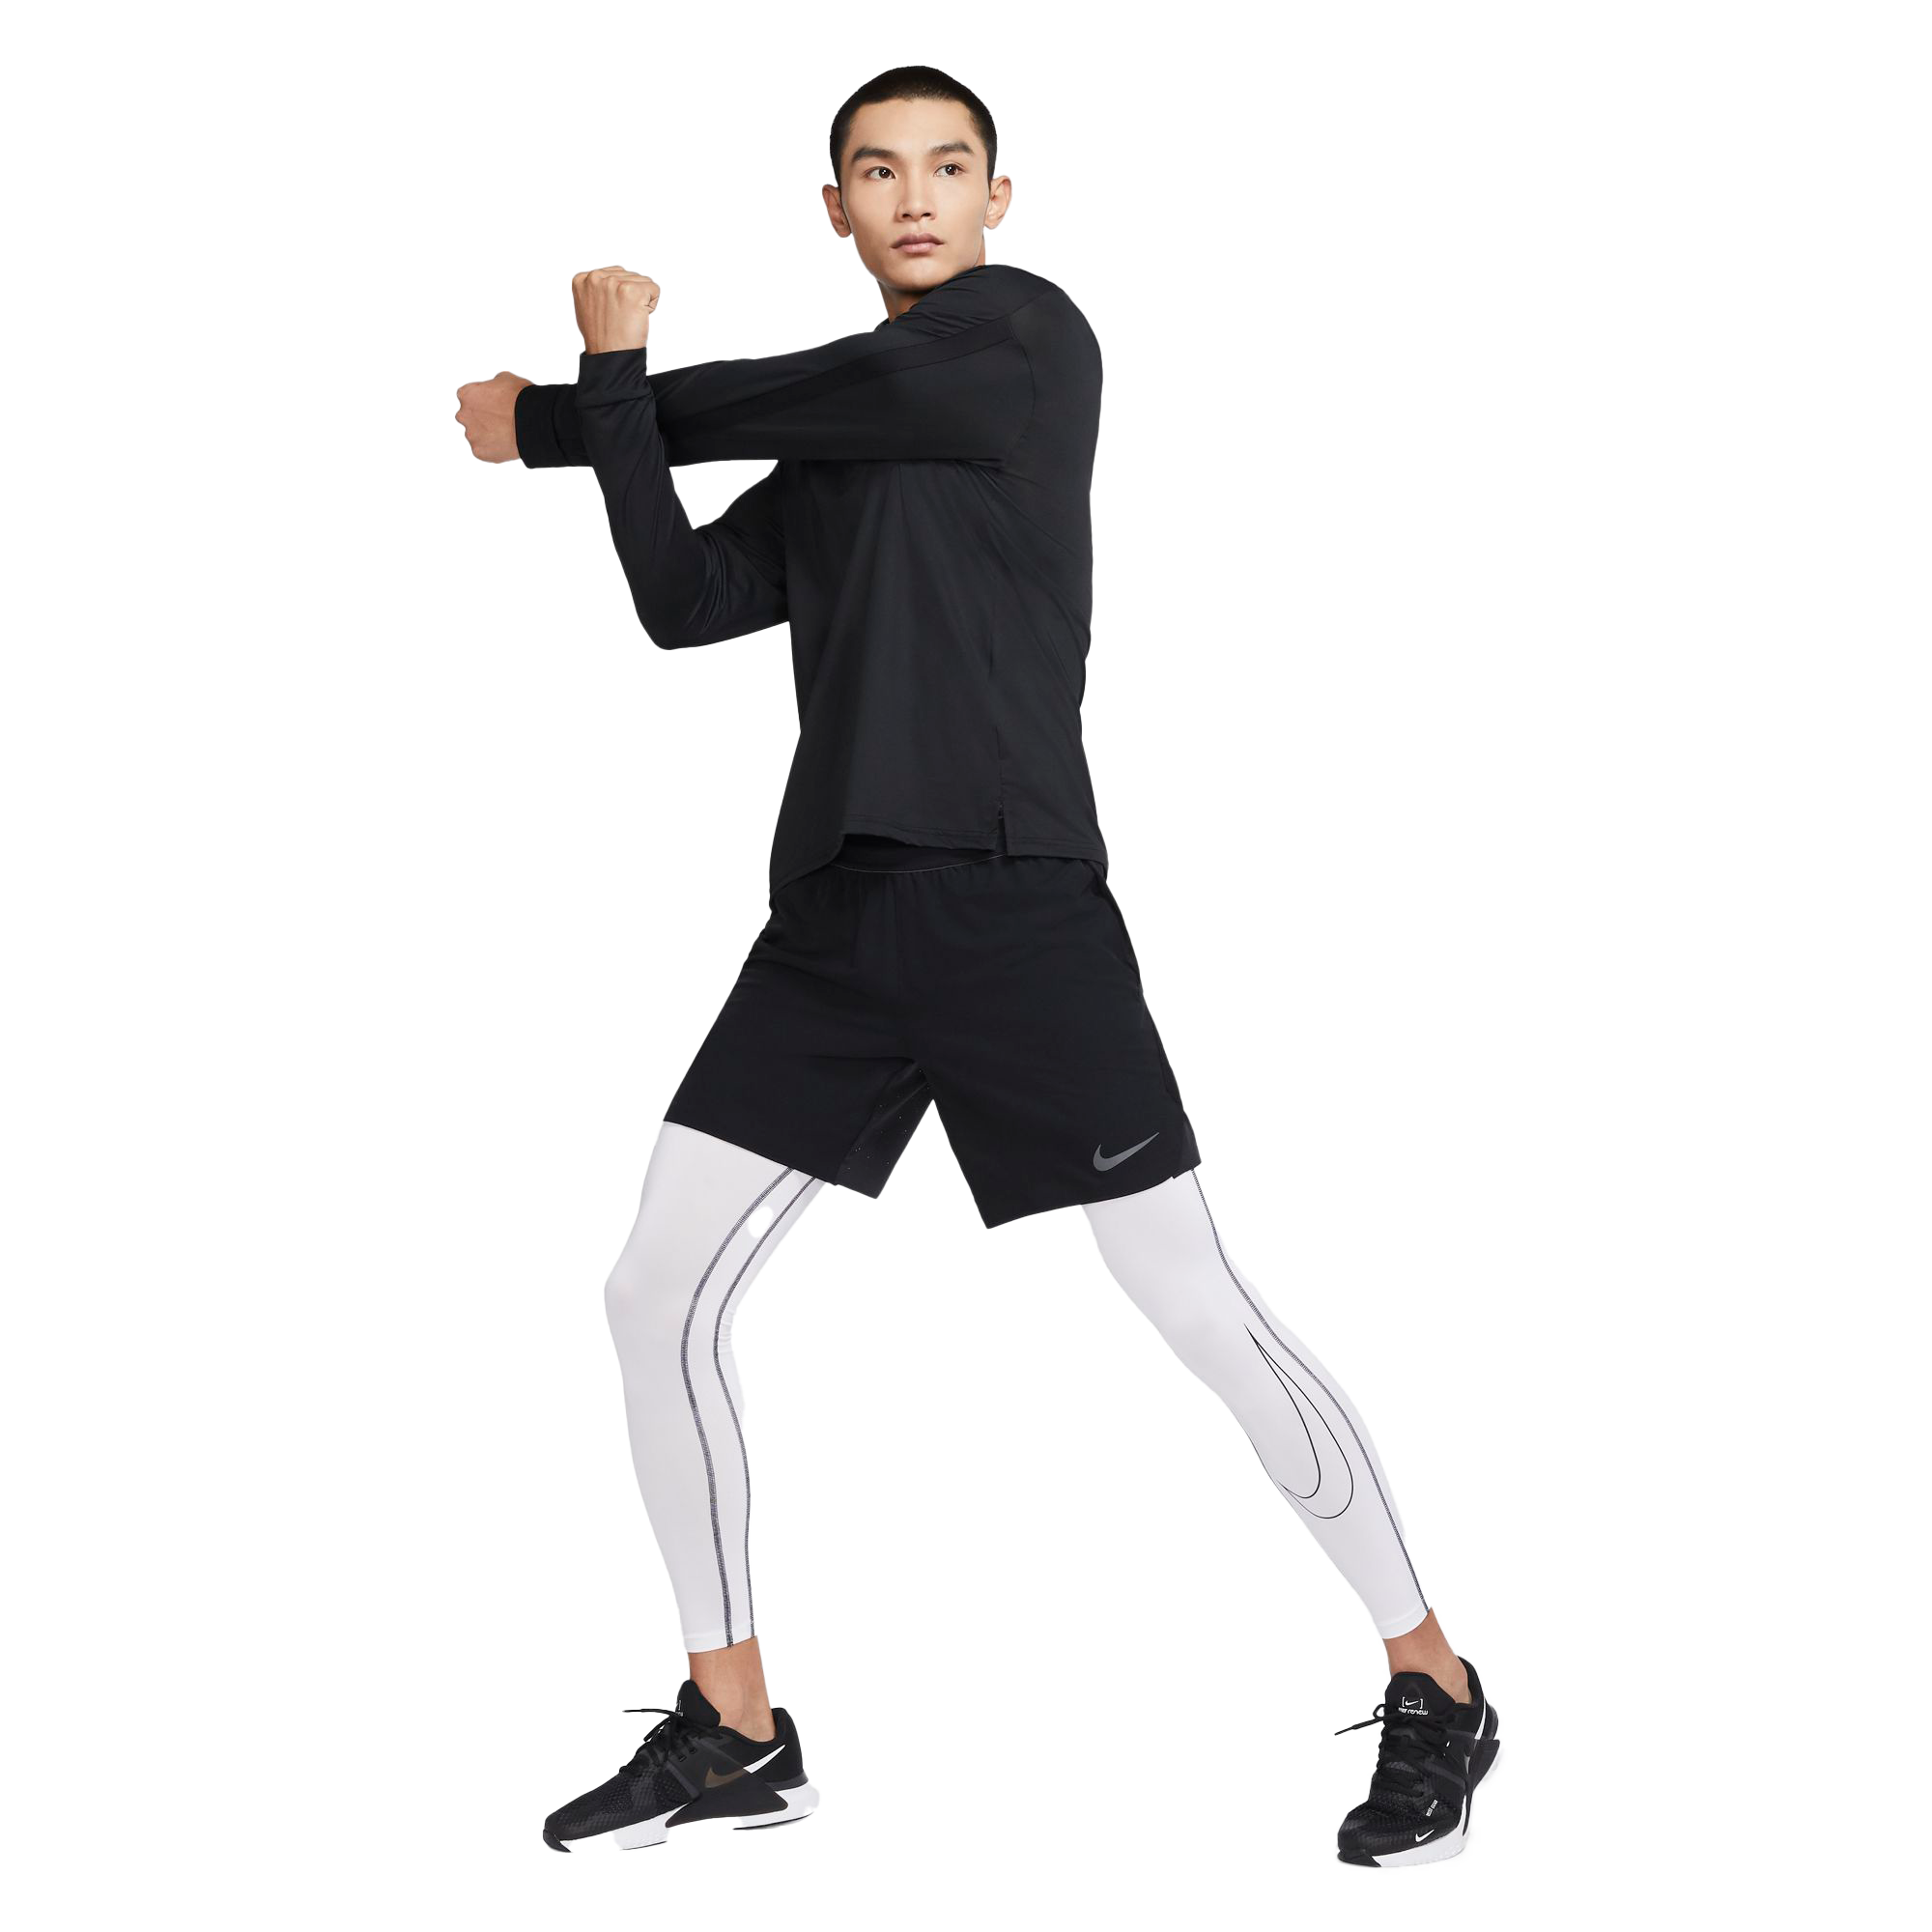 Legging Nike Dri-FIT Warm - Leggings - Men's Clothing - Fitness